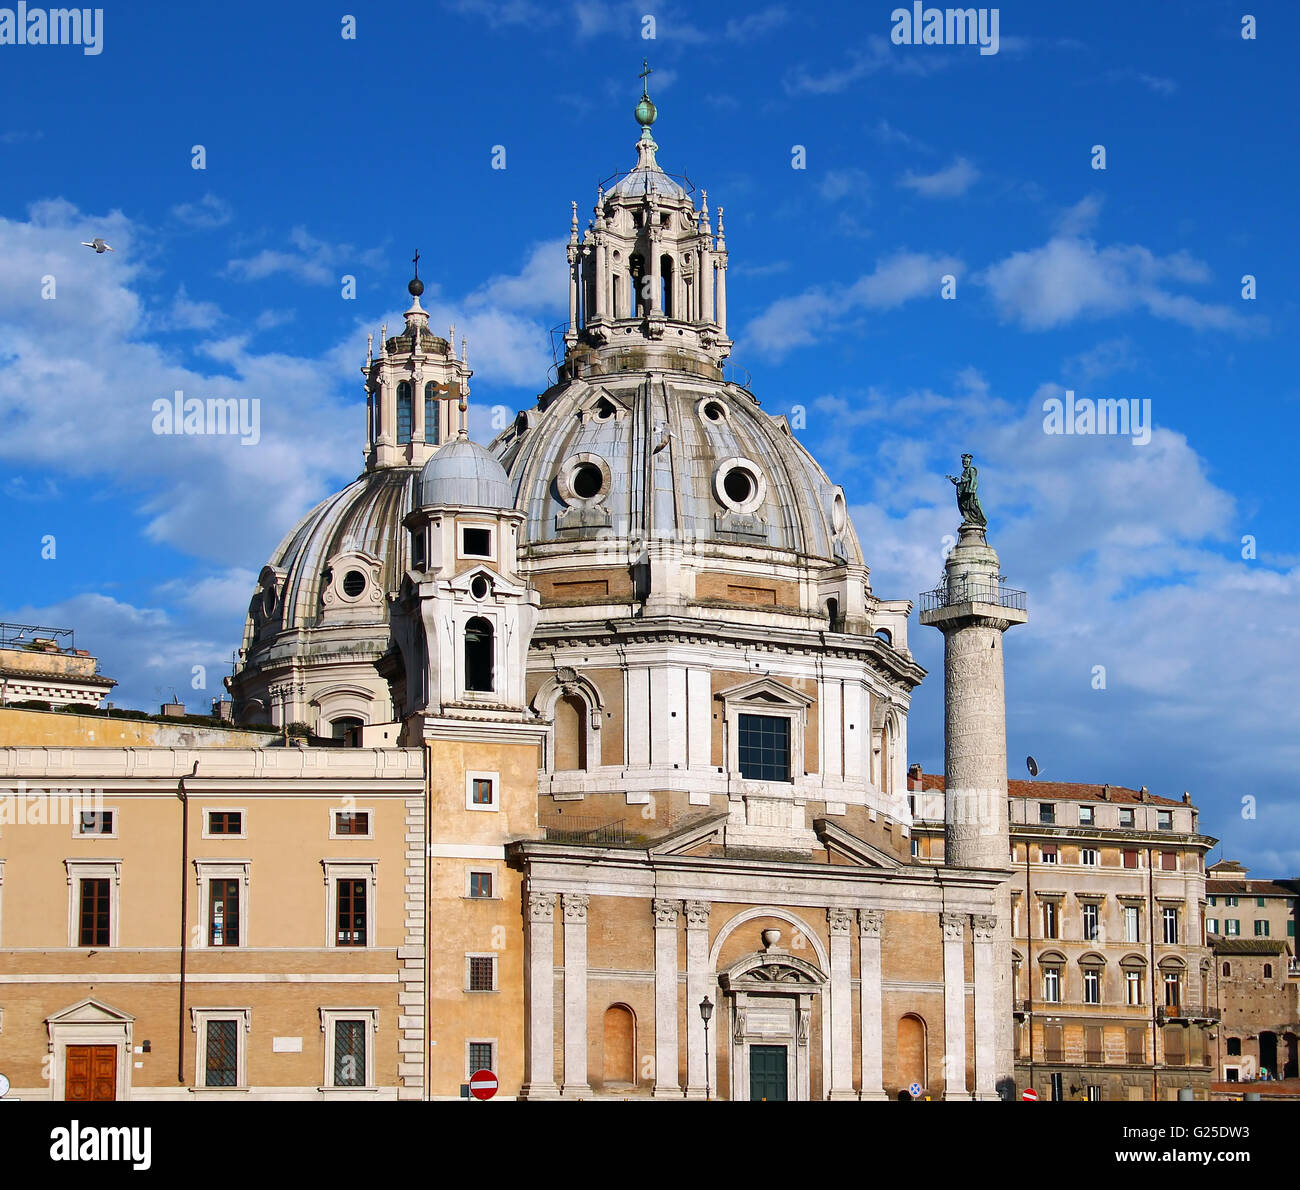 Santa Maria di Loreto and Trajan column, view from Piazza Venezia, Rome, Italy Stock Photo